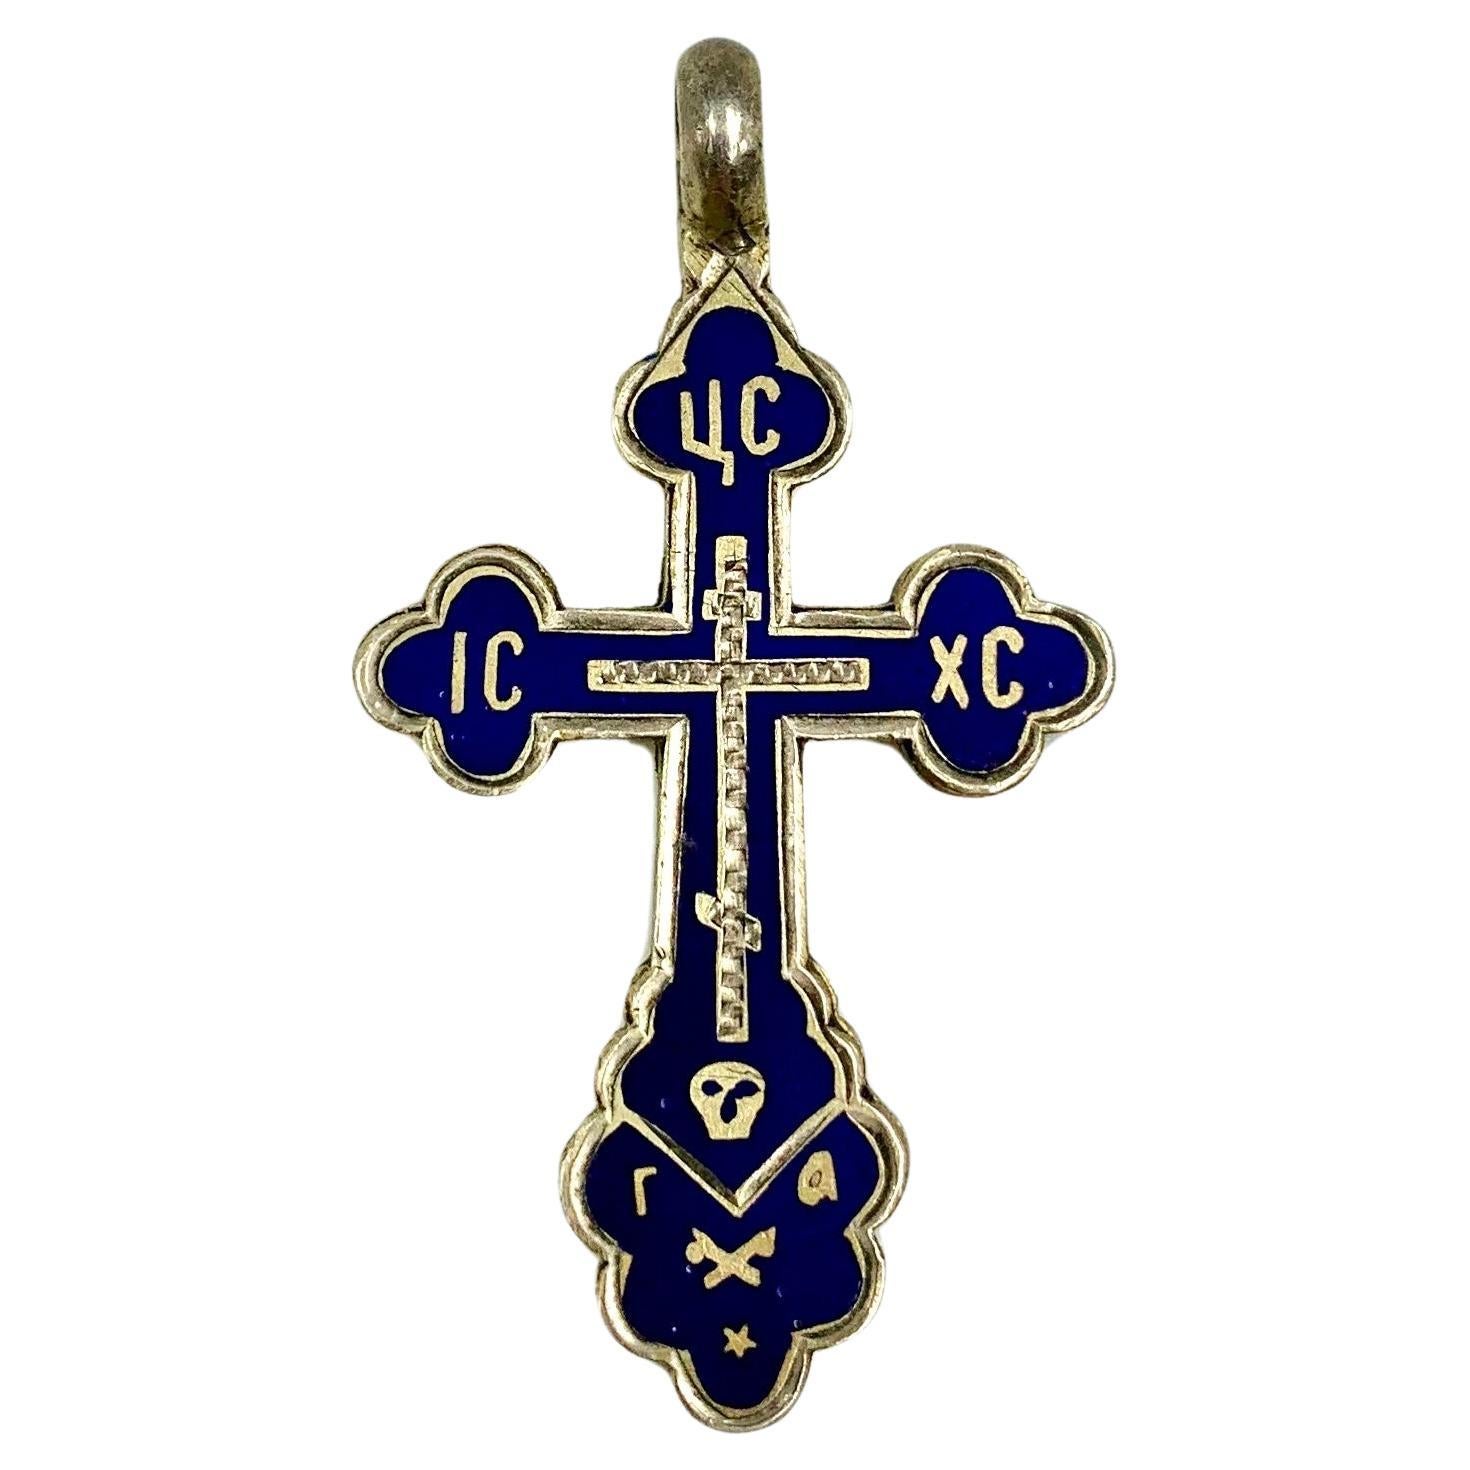 Fine Antique Russian Orthodox Cobalt Enamel Silver Cross, 19th Century